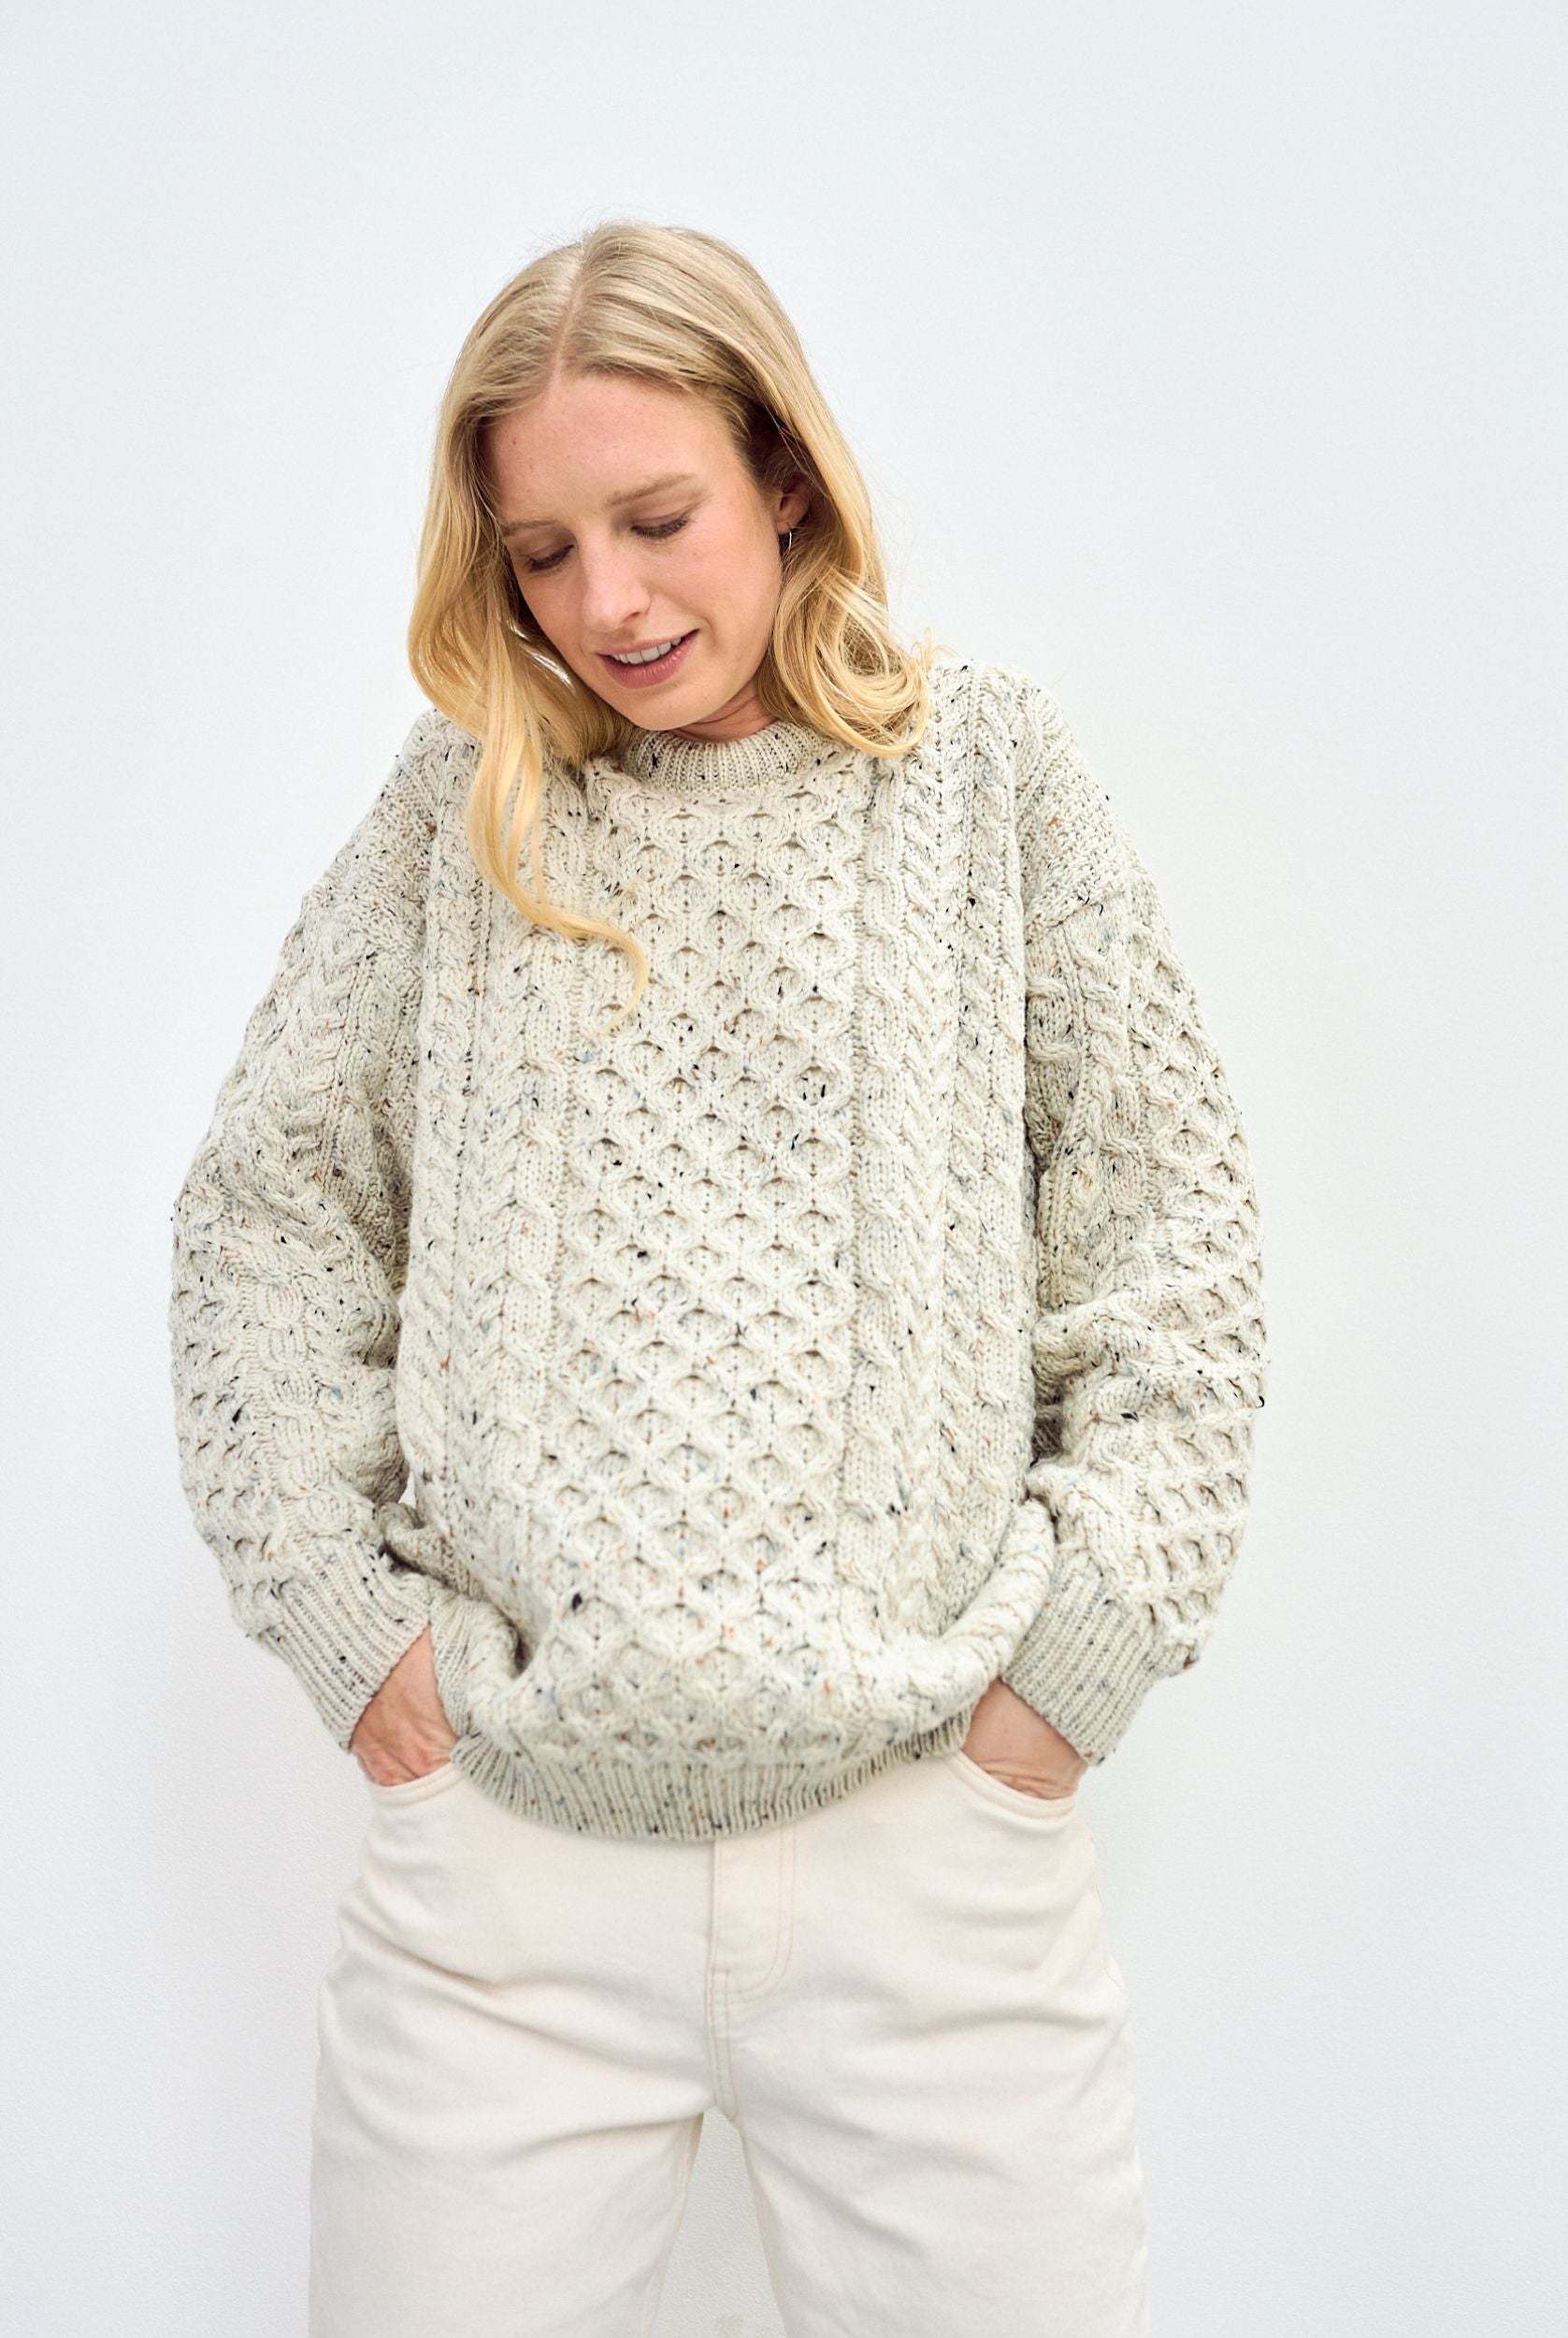 Inisheer Traditional Aran Womens Sweater | Aran Woollen Mills